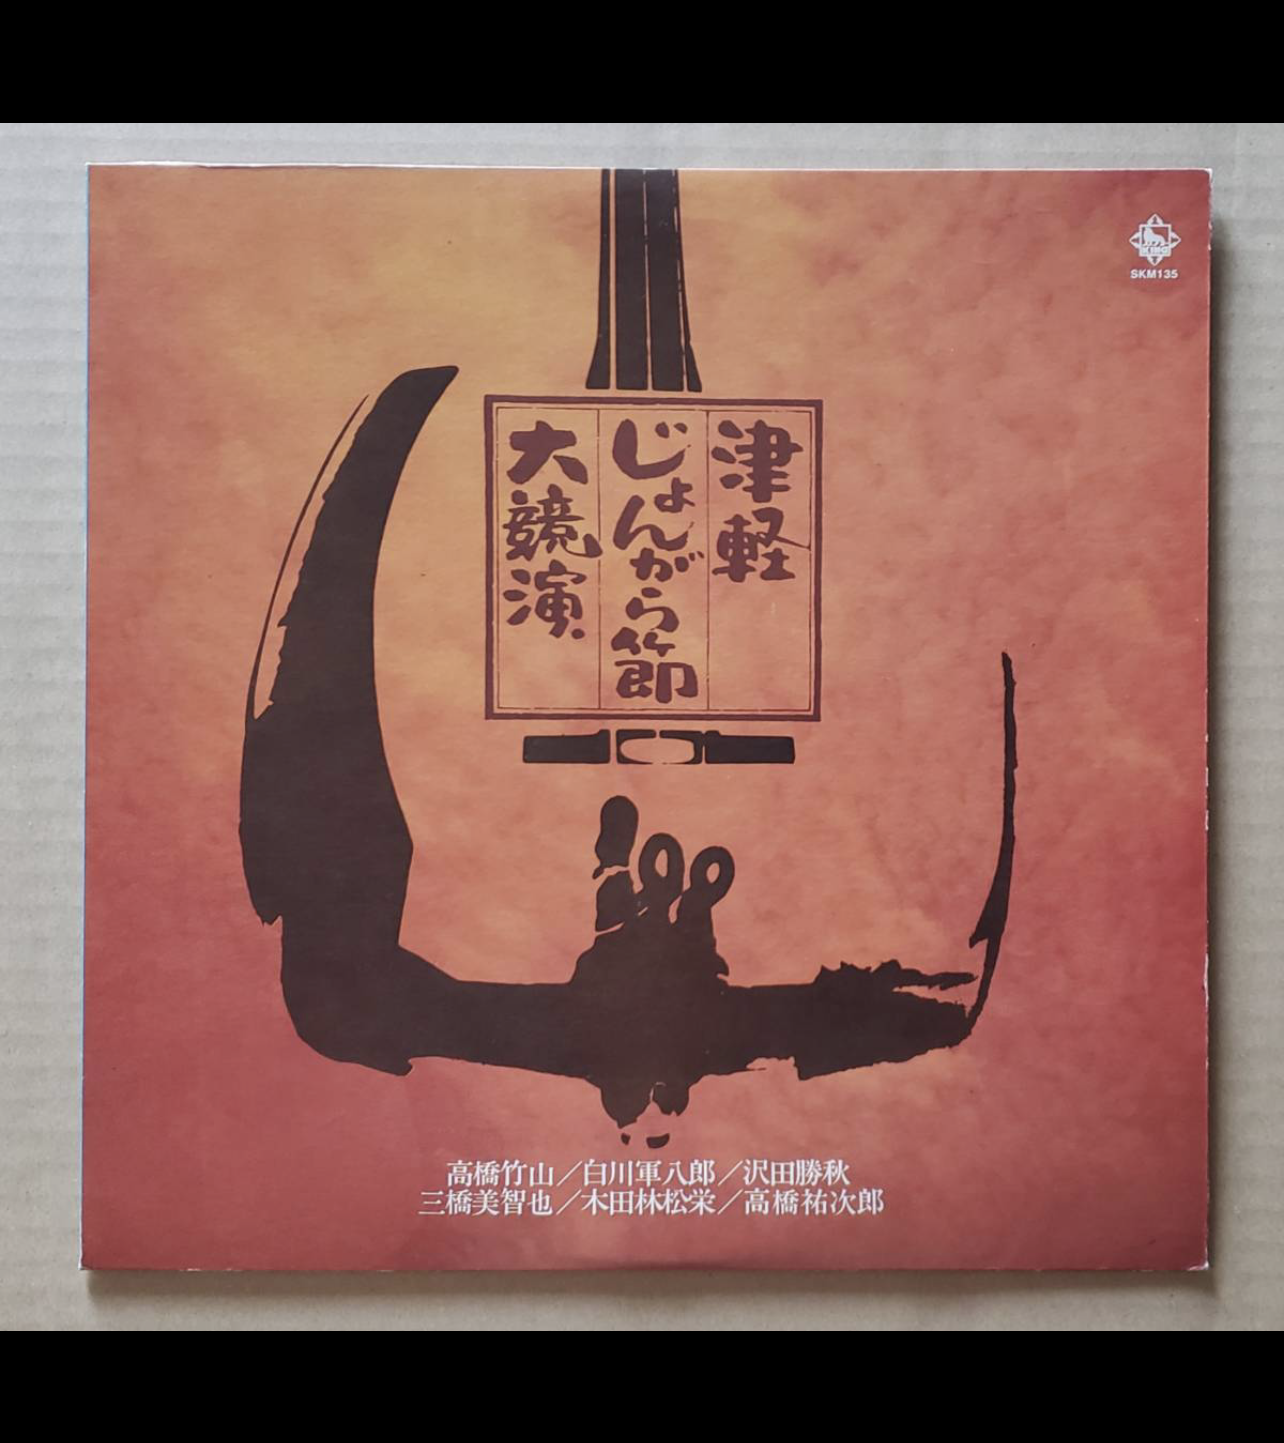 W LP Record 【Tsugaru Jyongarabushi Daikyouen】special！！！